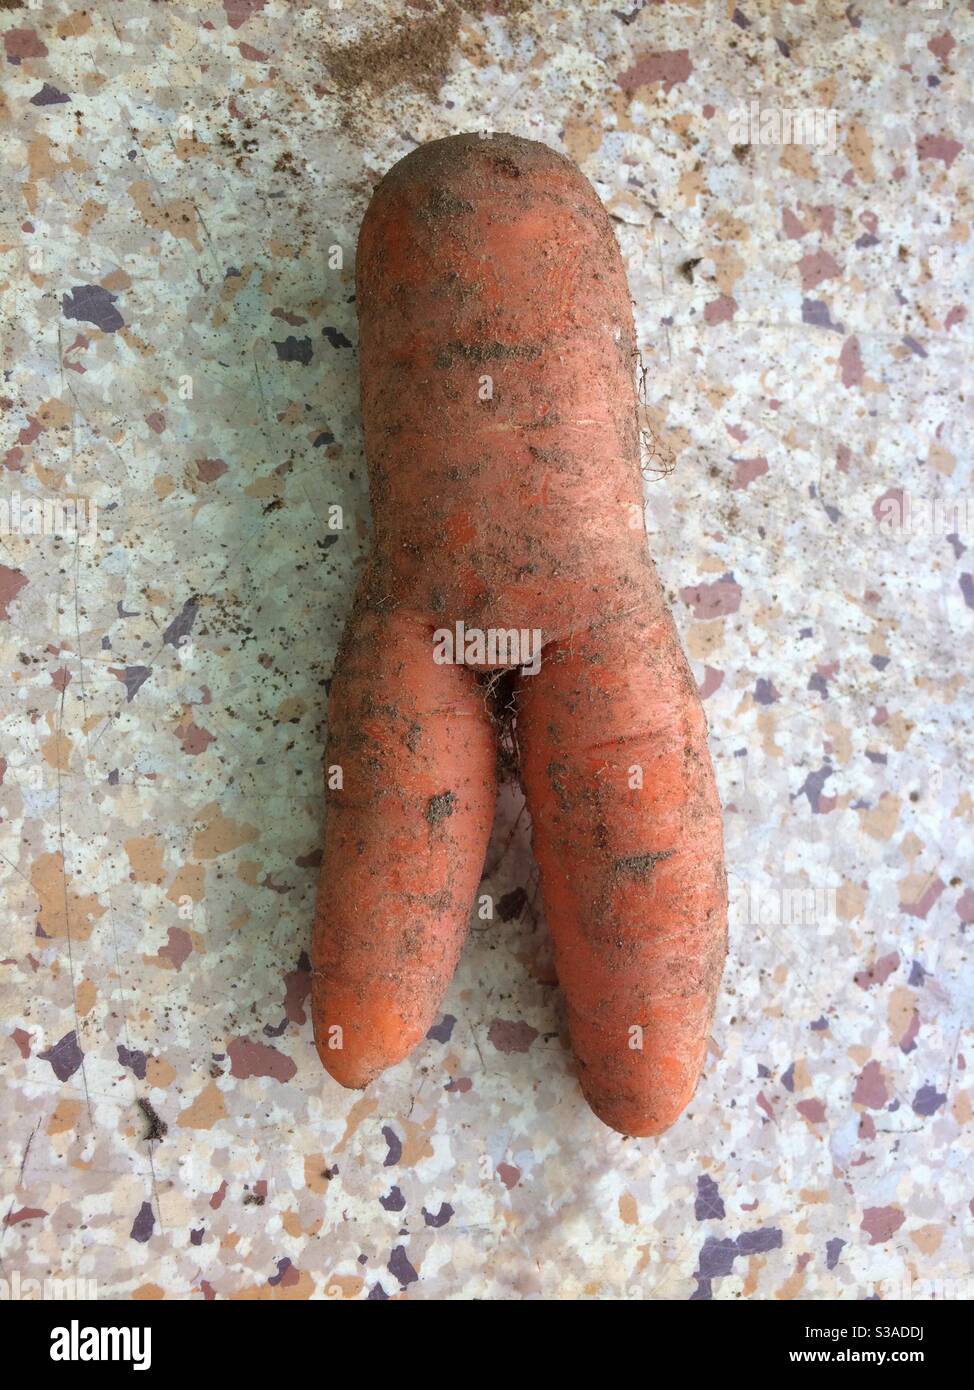 Suggestive carrot Stock Photo